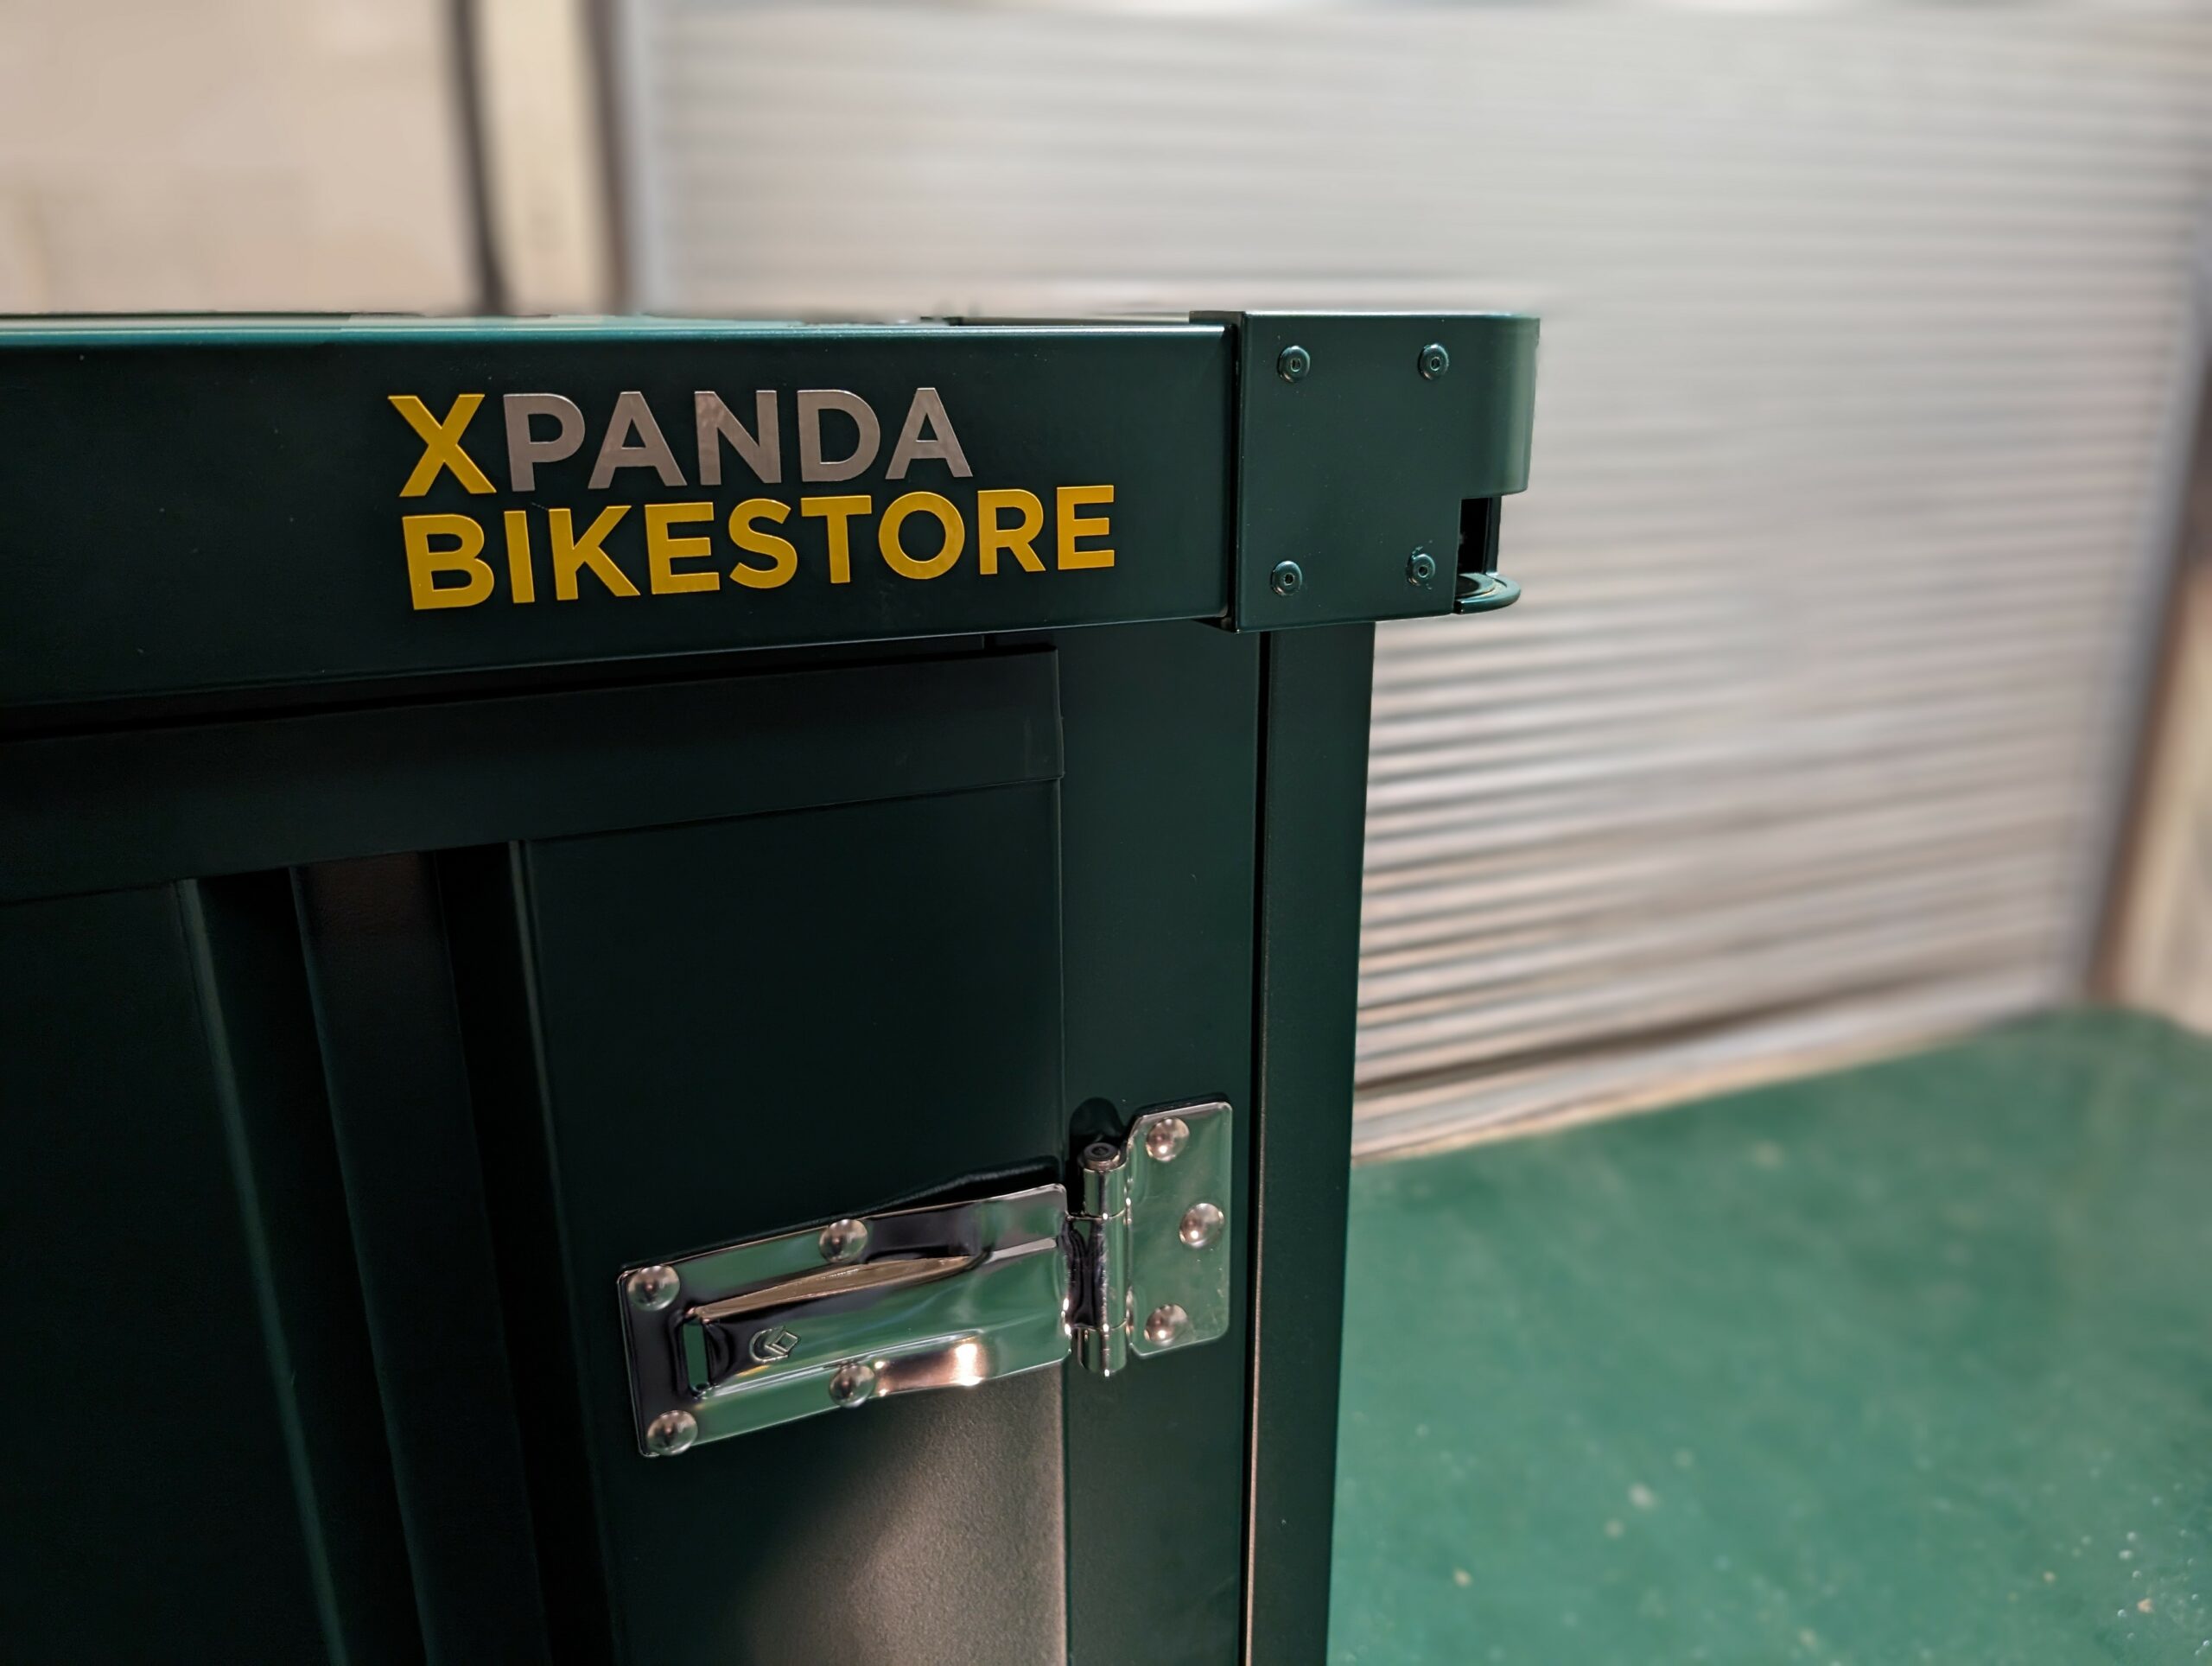 bike storage shed